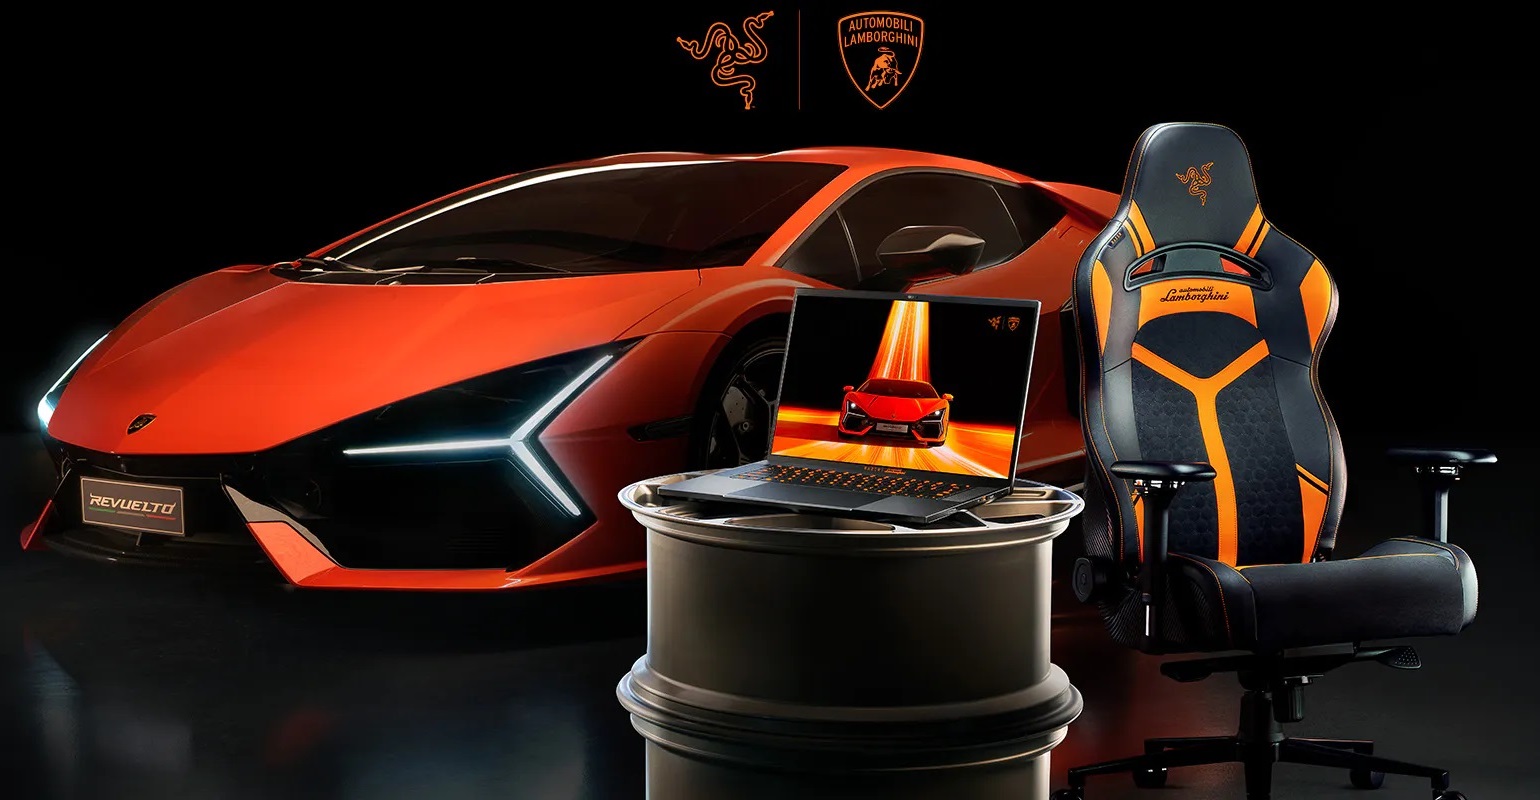 Razer en Lamborghini hebben de Razer Blade 16 x Automobili Lamborghini Edition laptop onthuld voor $5000